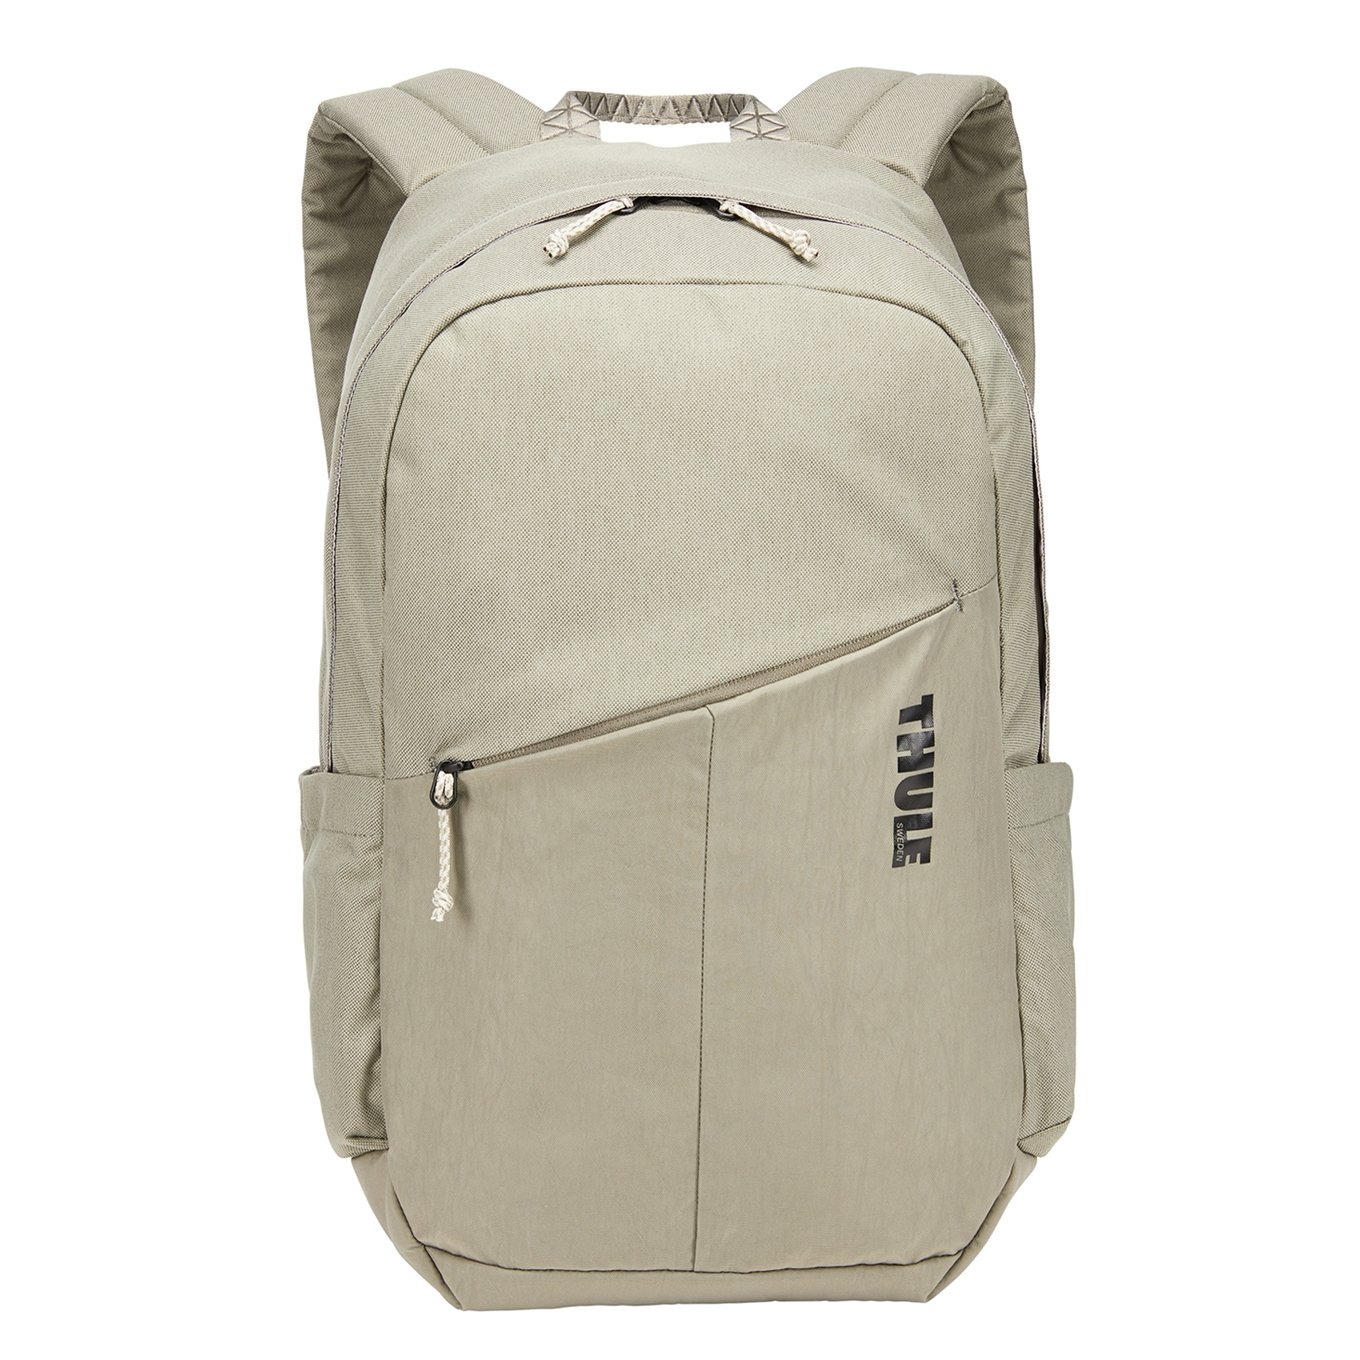 Thule Campus Notus Backpack 20L vetiver gray backpack